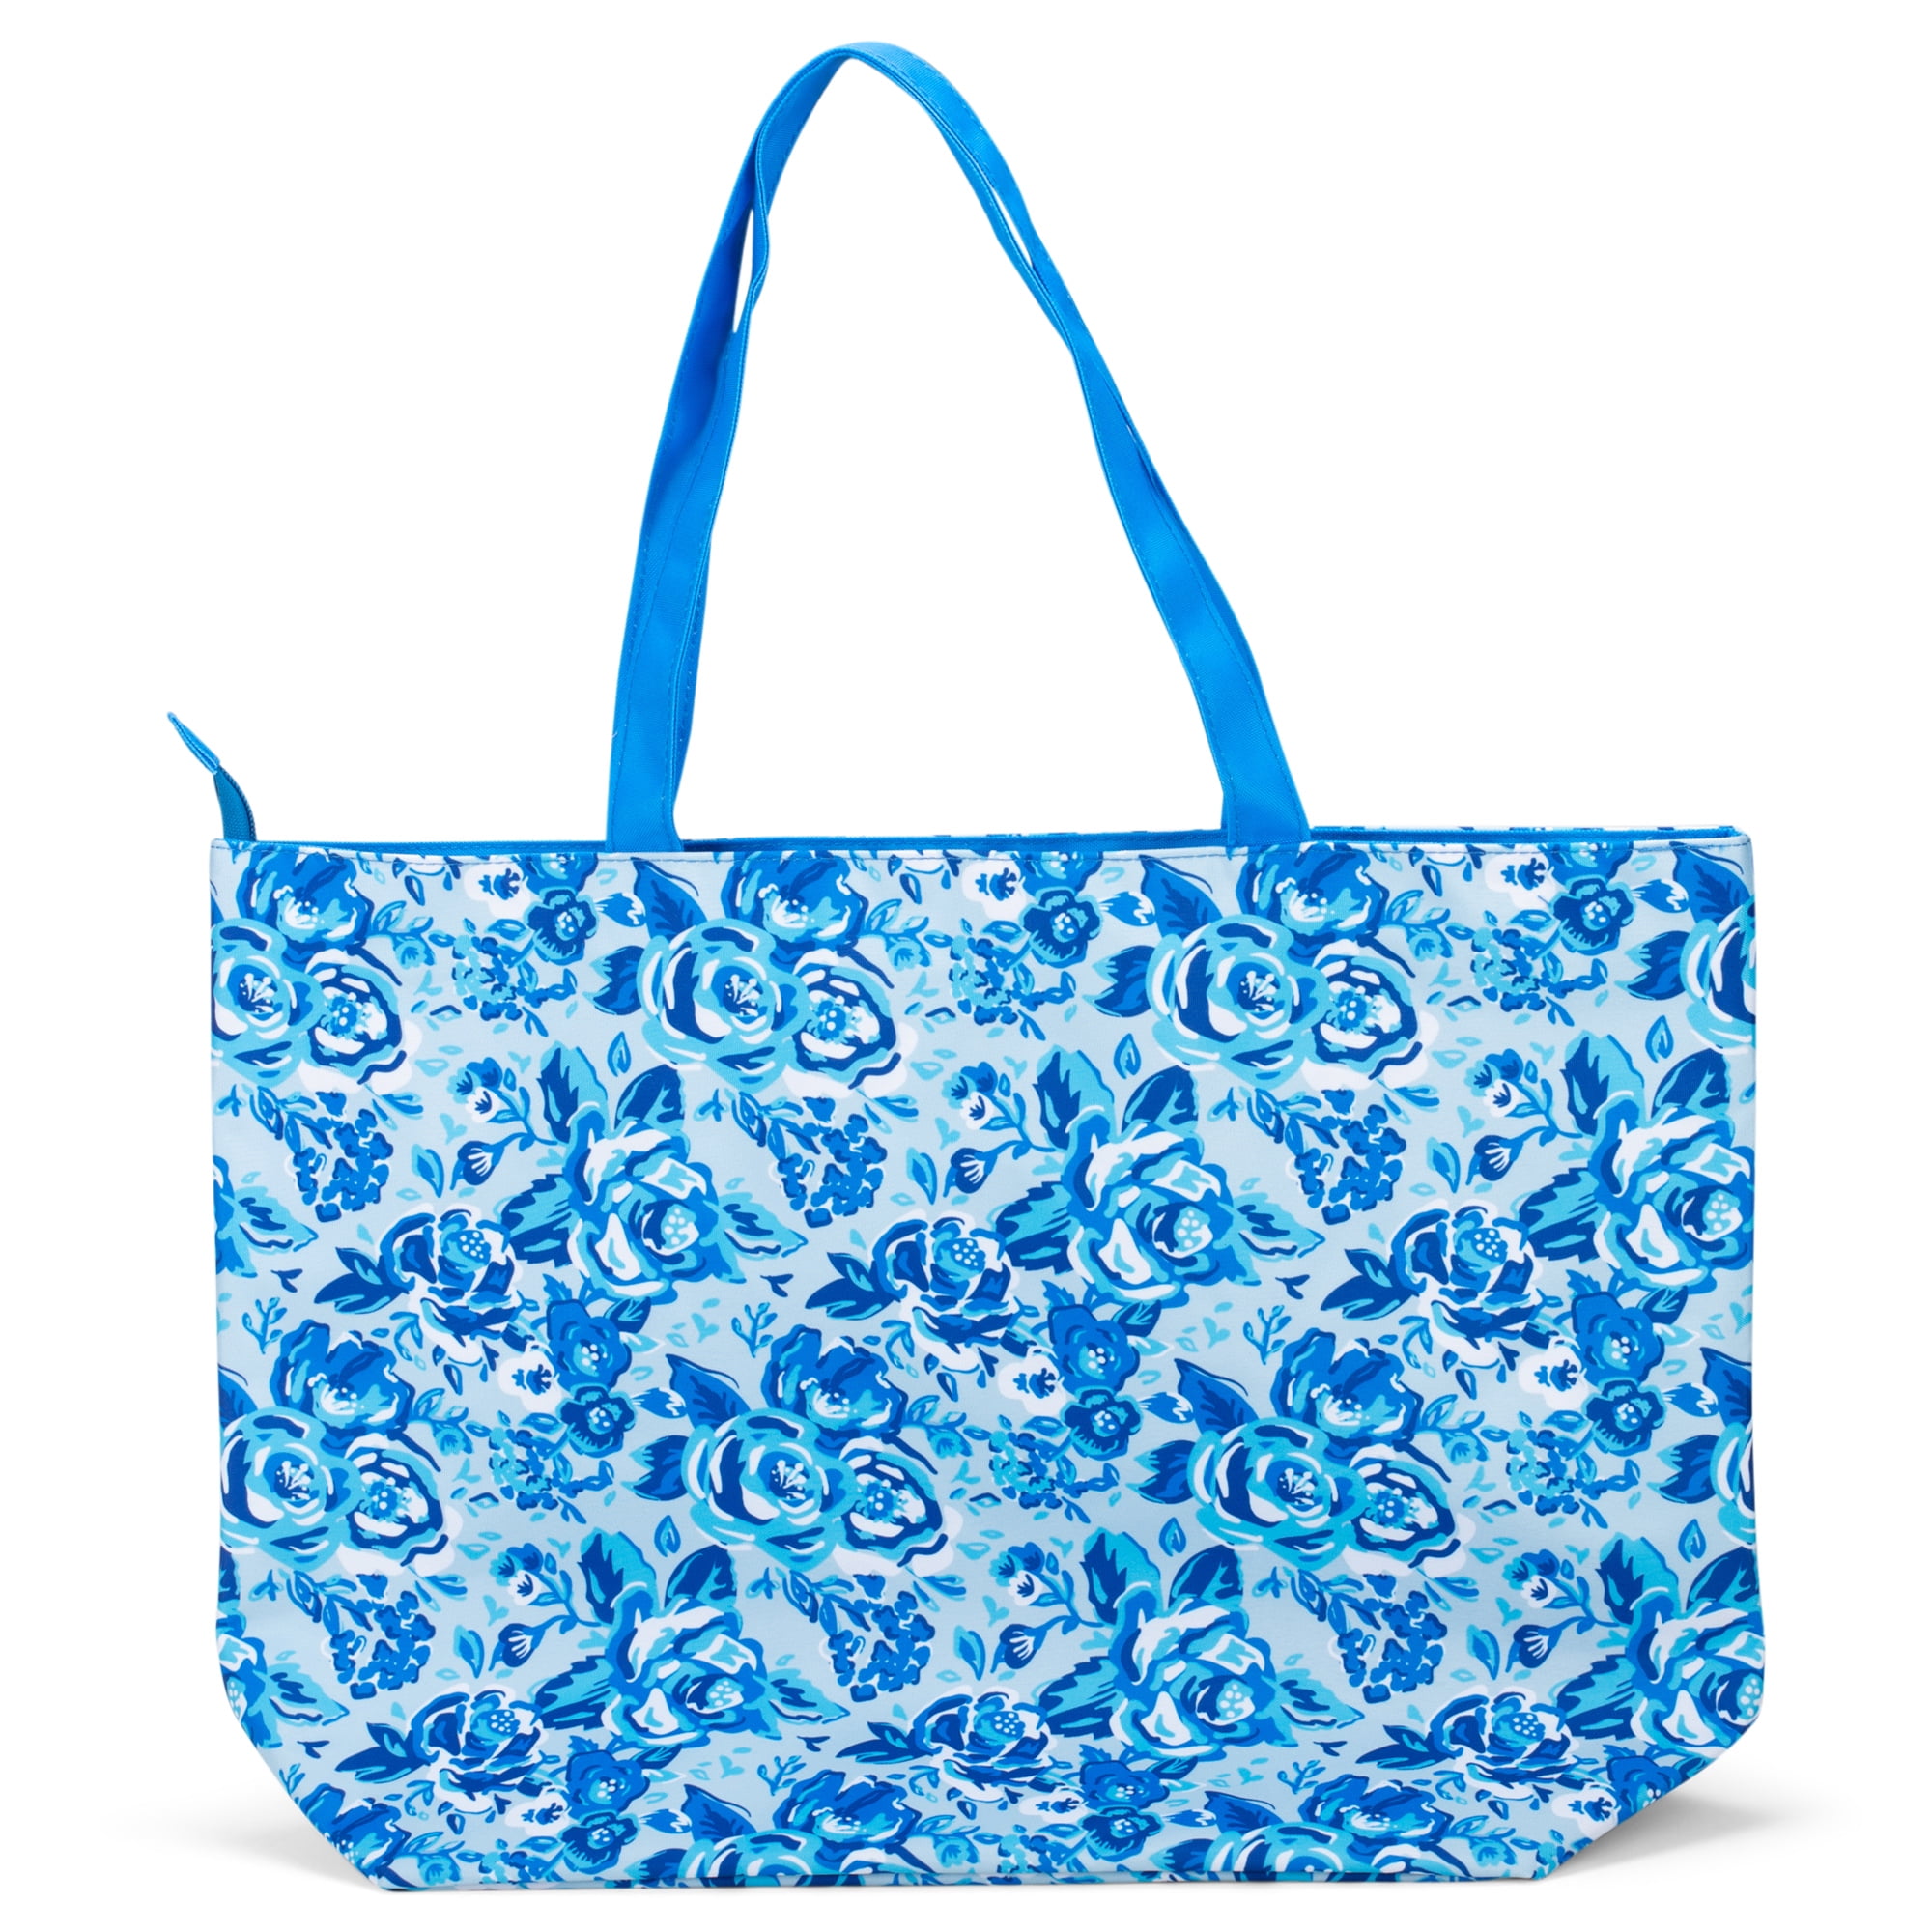 Viv & Lou Blue Ivy Floral 19.5 x 18 Polyester Travel Tote Bag - Walmart.com